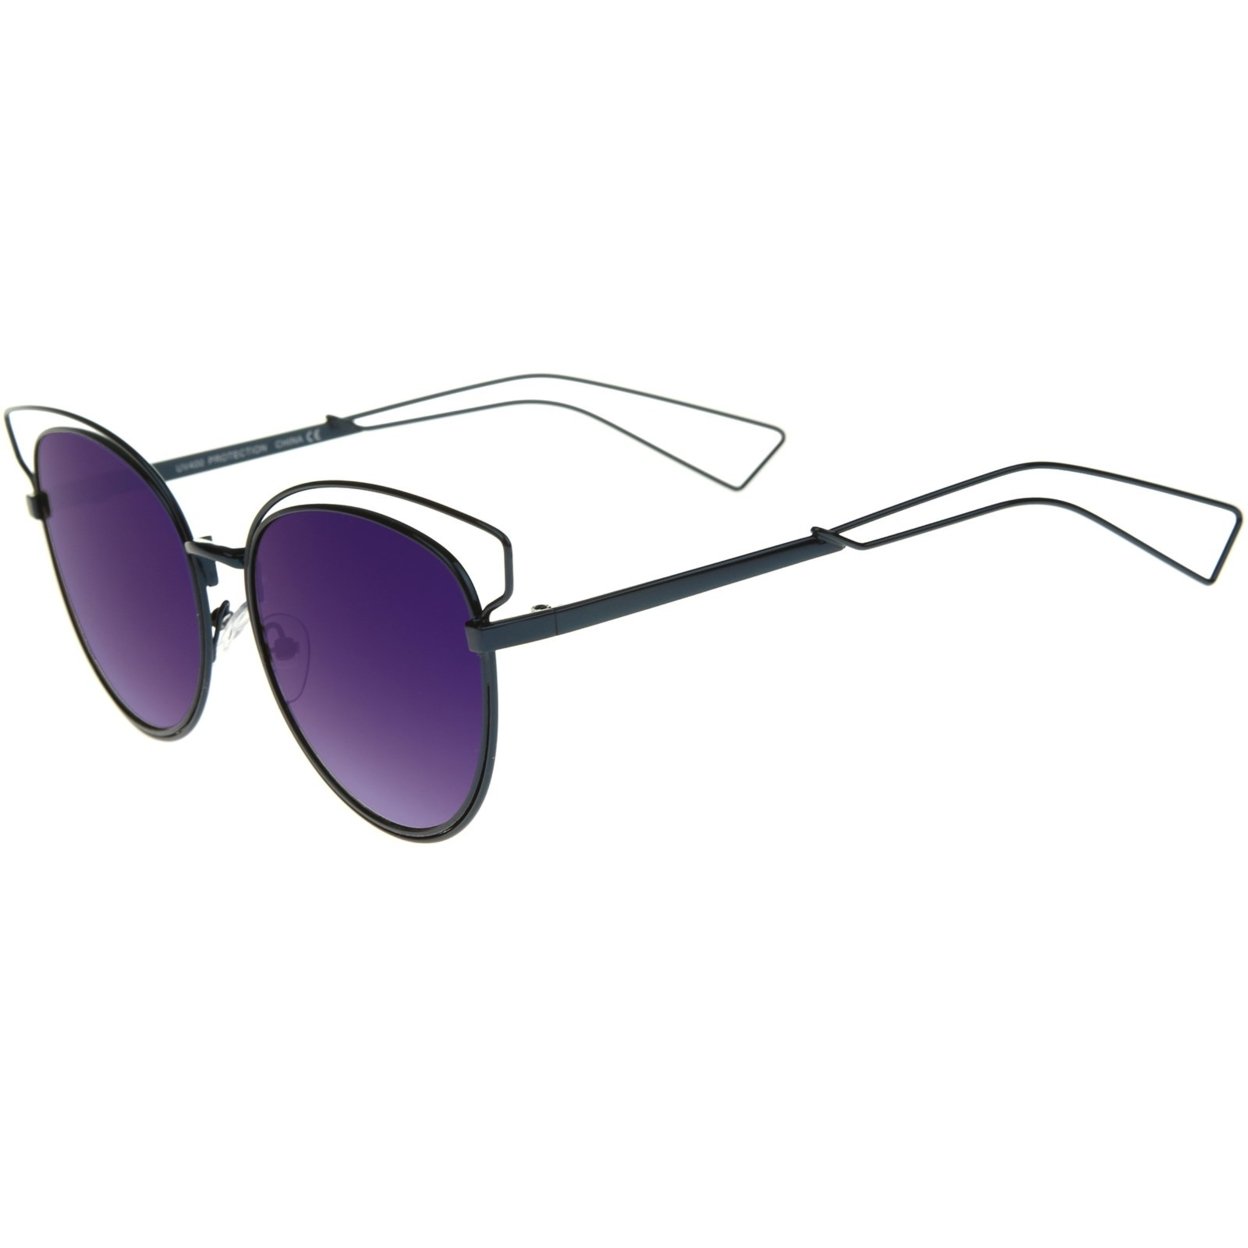 Womens Fashion Open Metal Frame Iridescent Lens Cat Eye Sunglasses 55mm - Hot Pink / Magenta Mirror